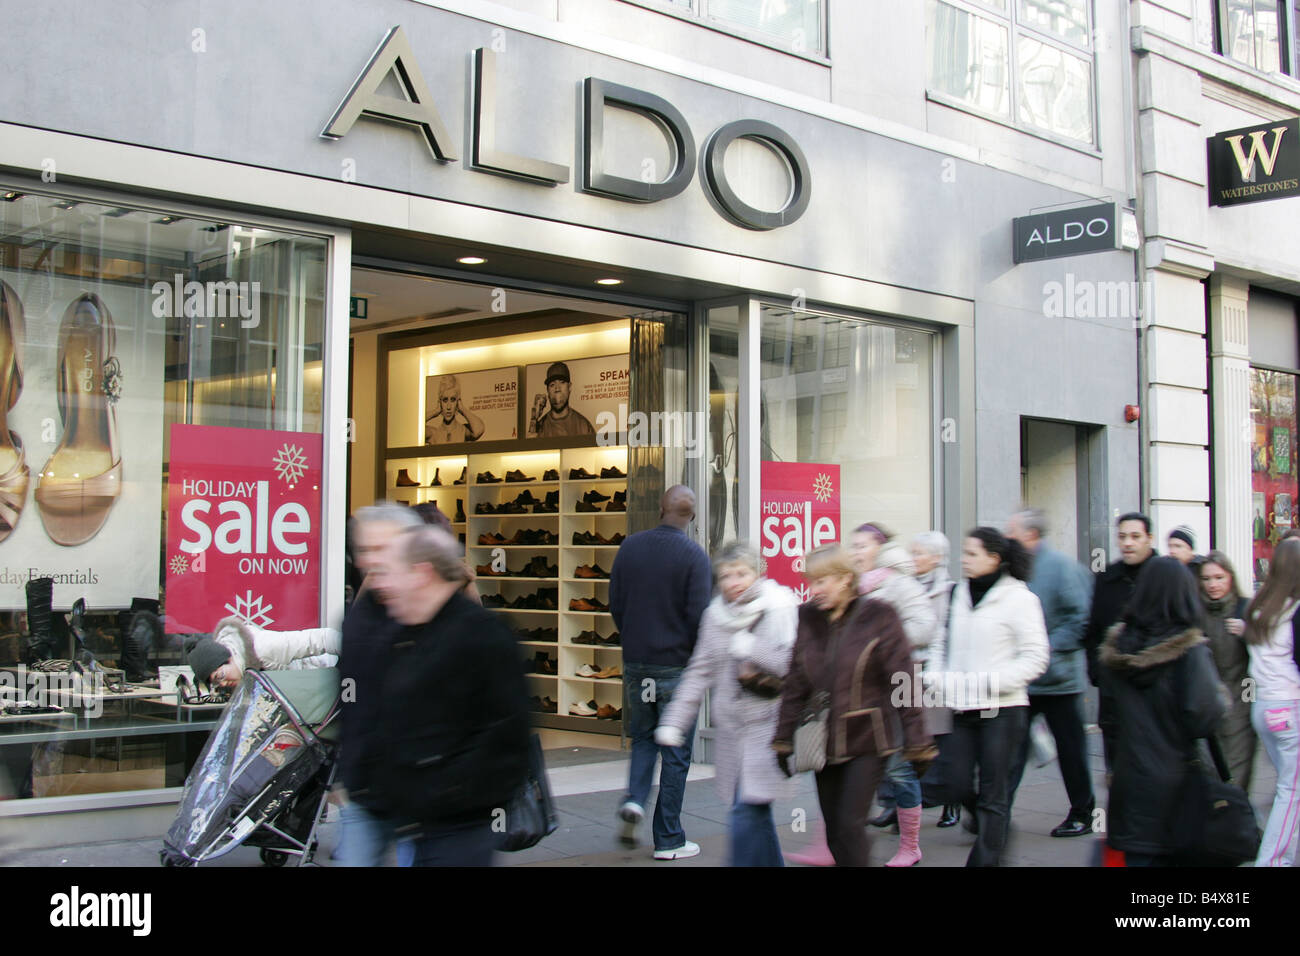 Fremskynde Derivation Intrusion Aldo In Store Sale Online Sale, UP TO 61% OFF